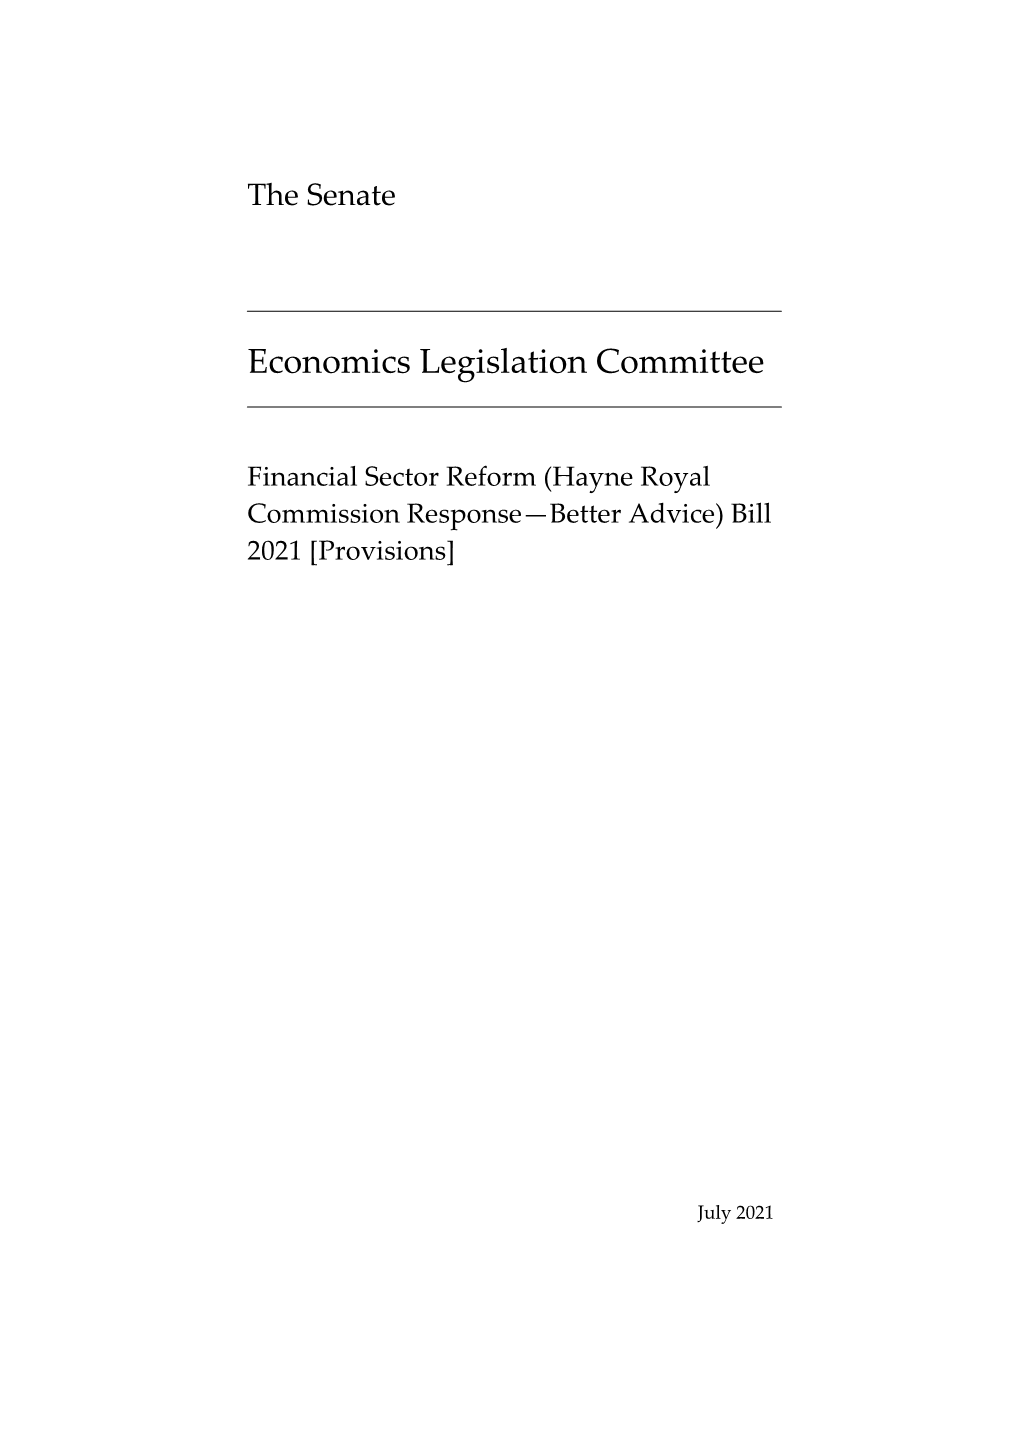 (Hayne Royal Commission Response—Better Advice) Bill 2021 [Provisions]